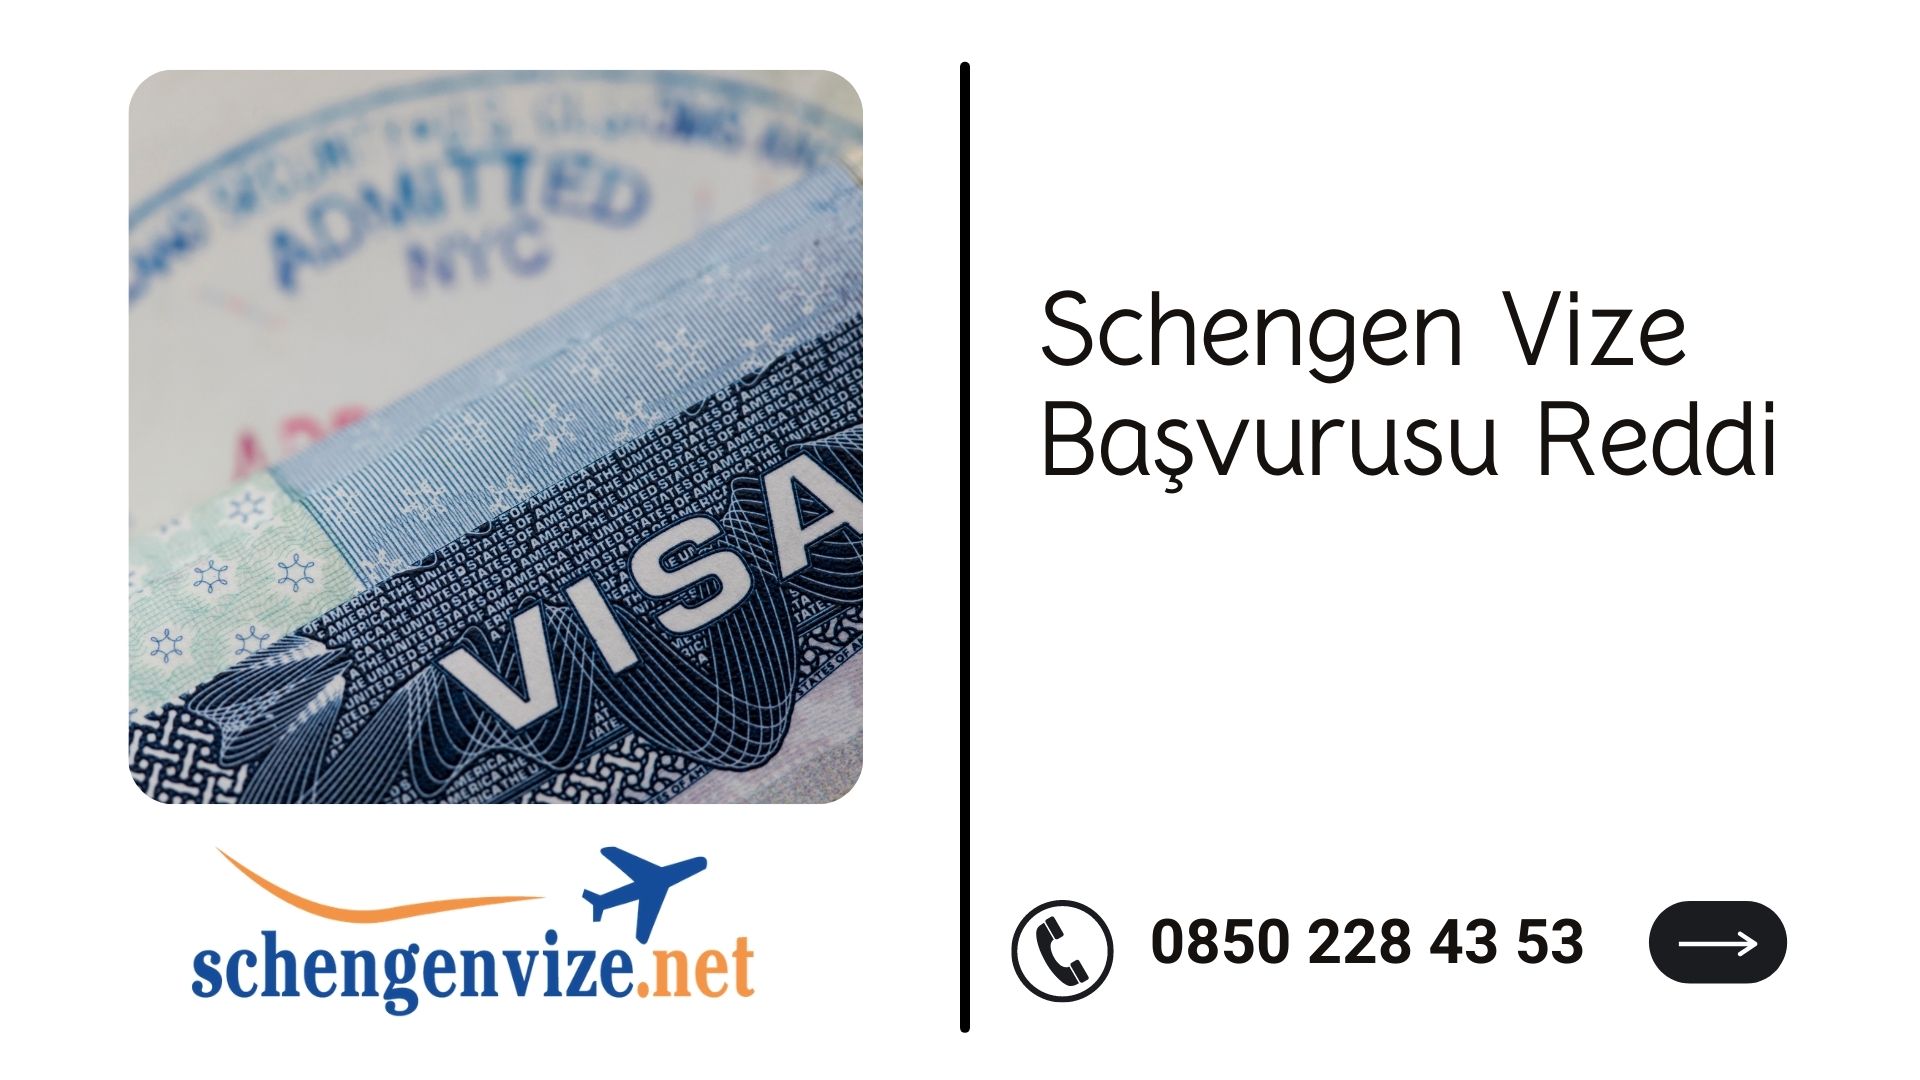 Schengen Vize Başvurusu Reddi